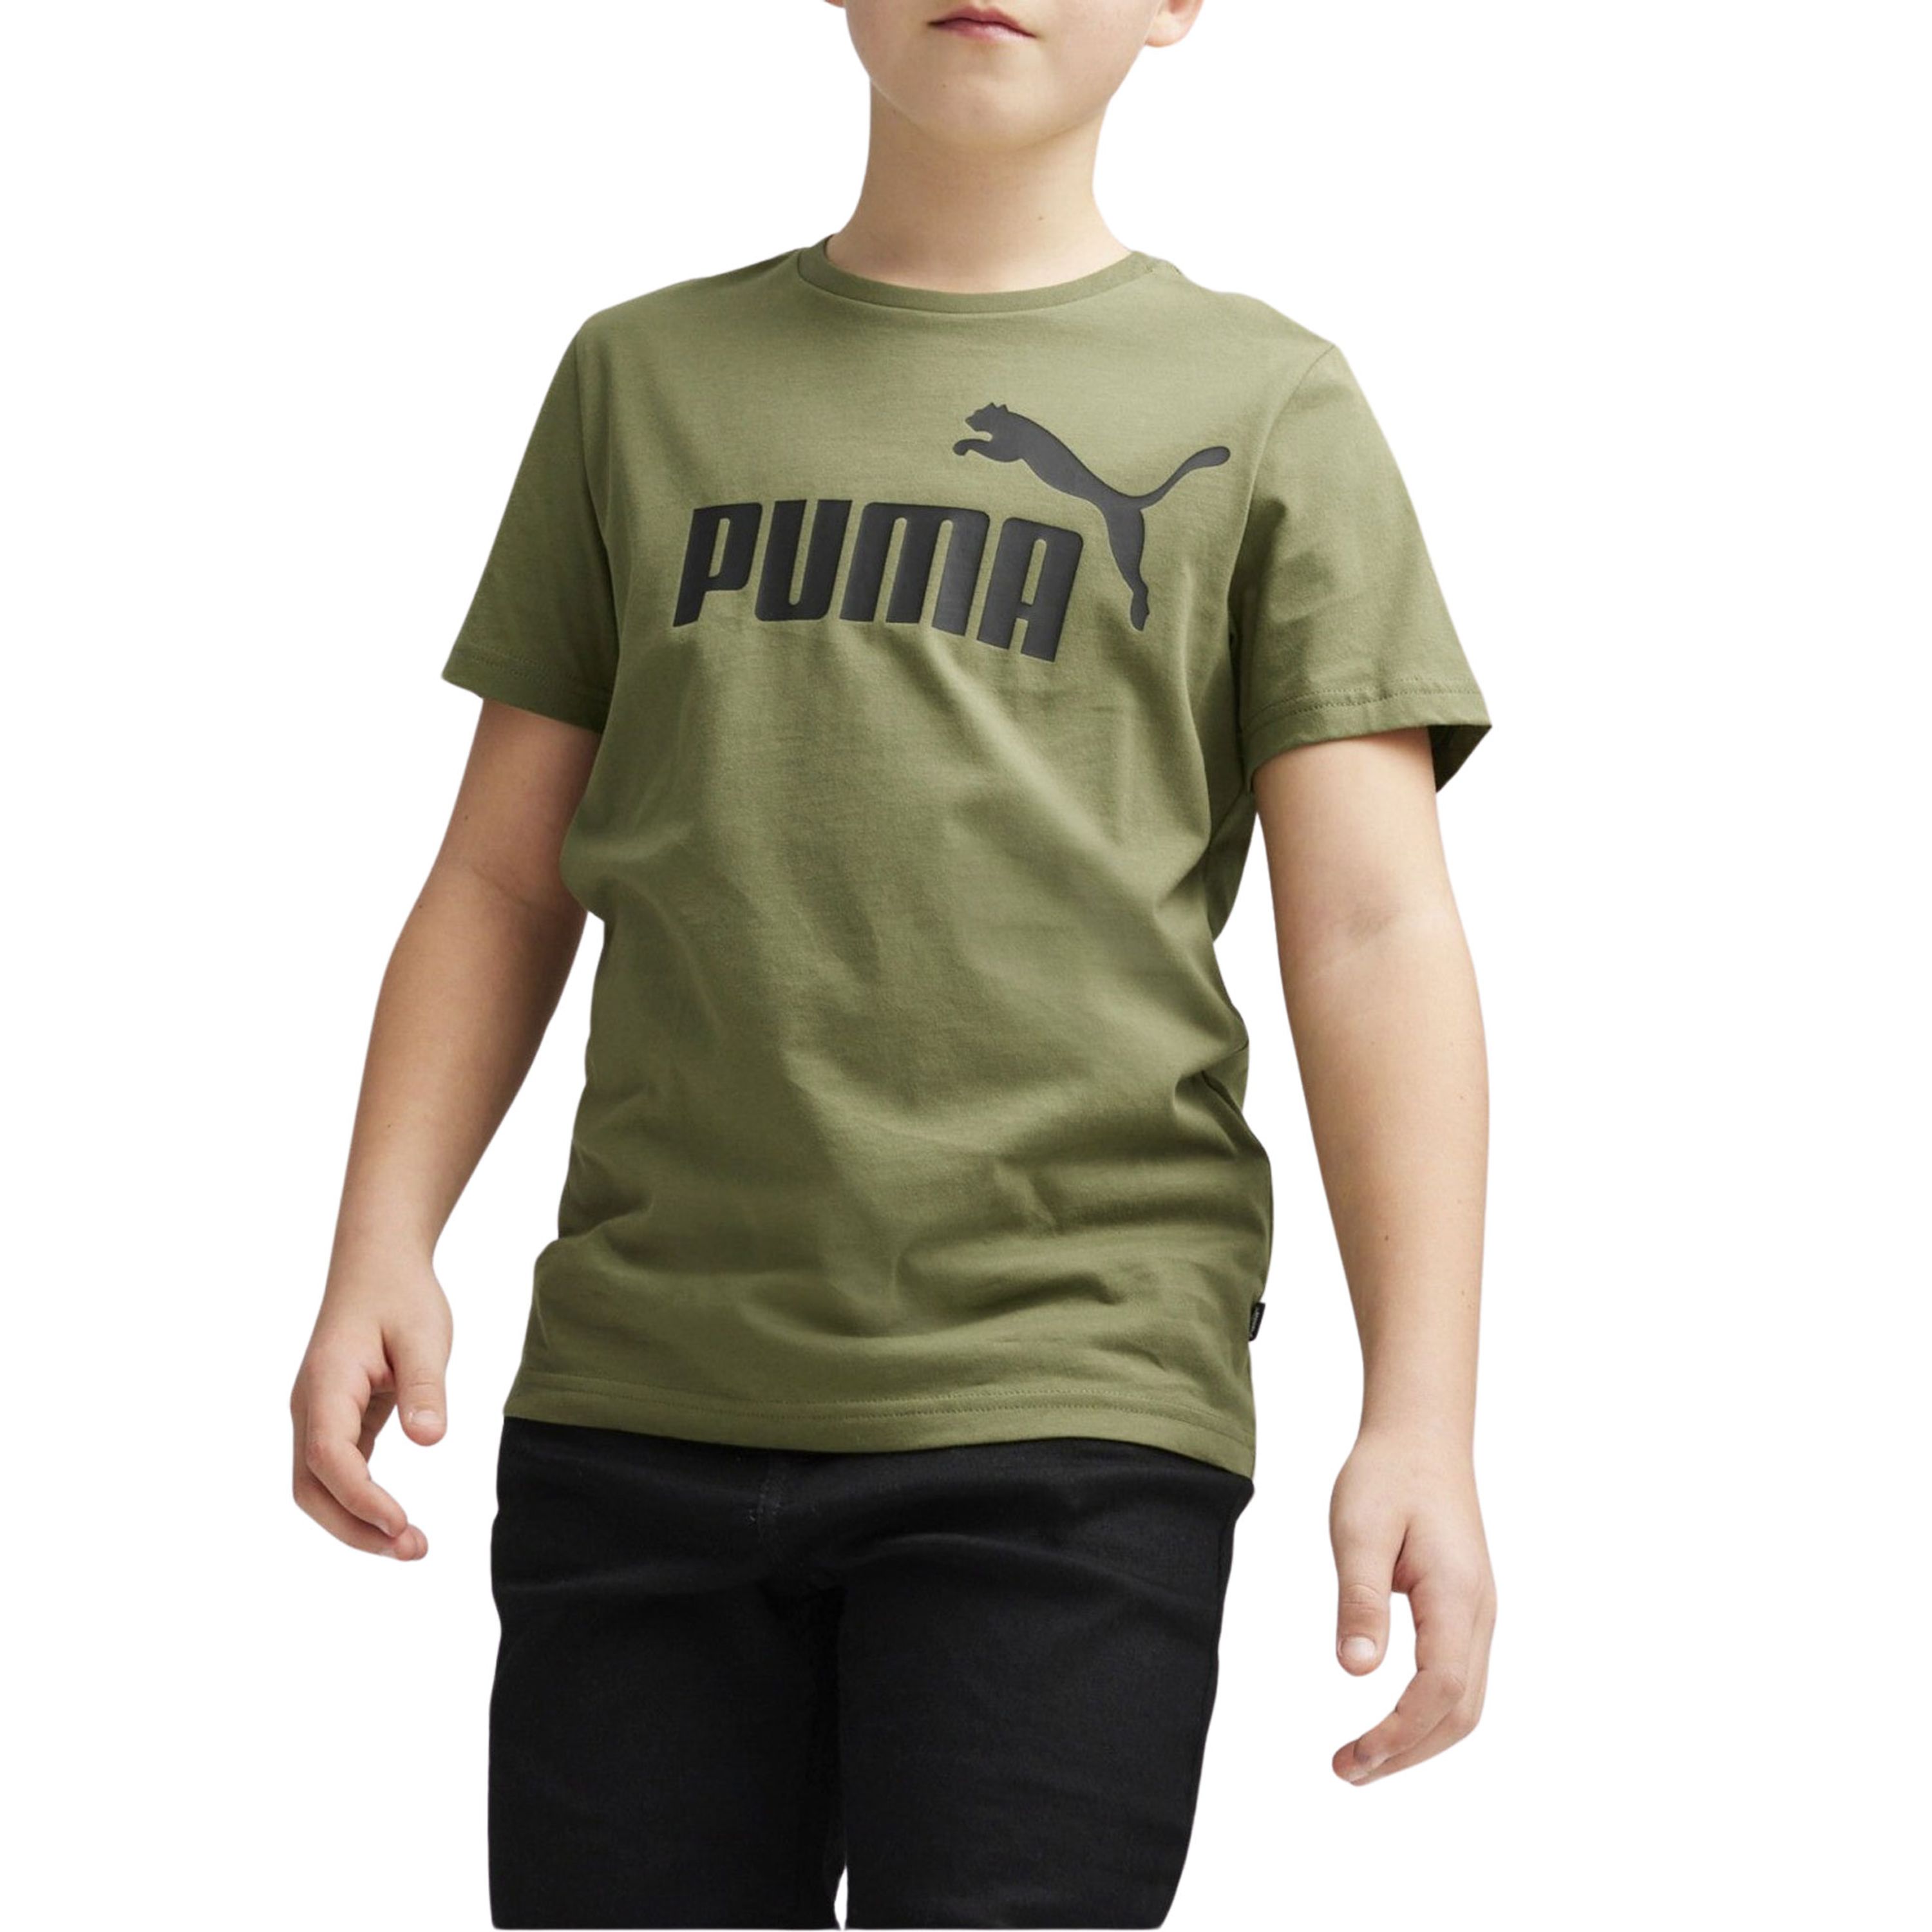 Puma T-shirt olijfgroen zwart Katoen Ronde hals Logo 164